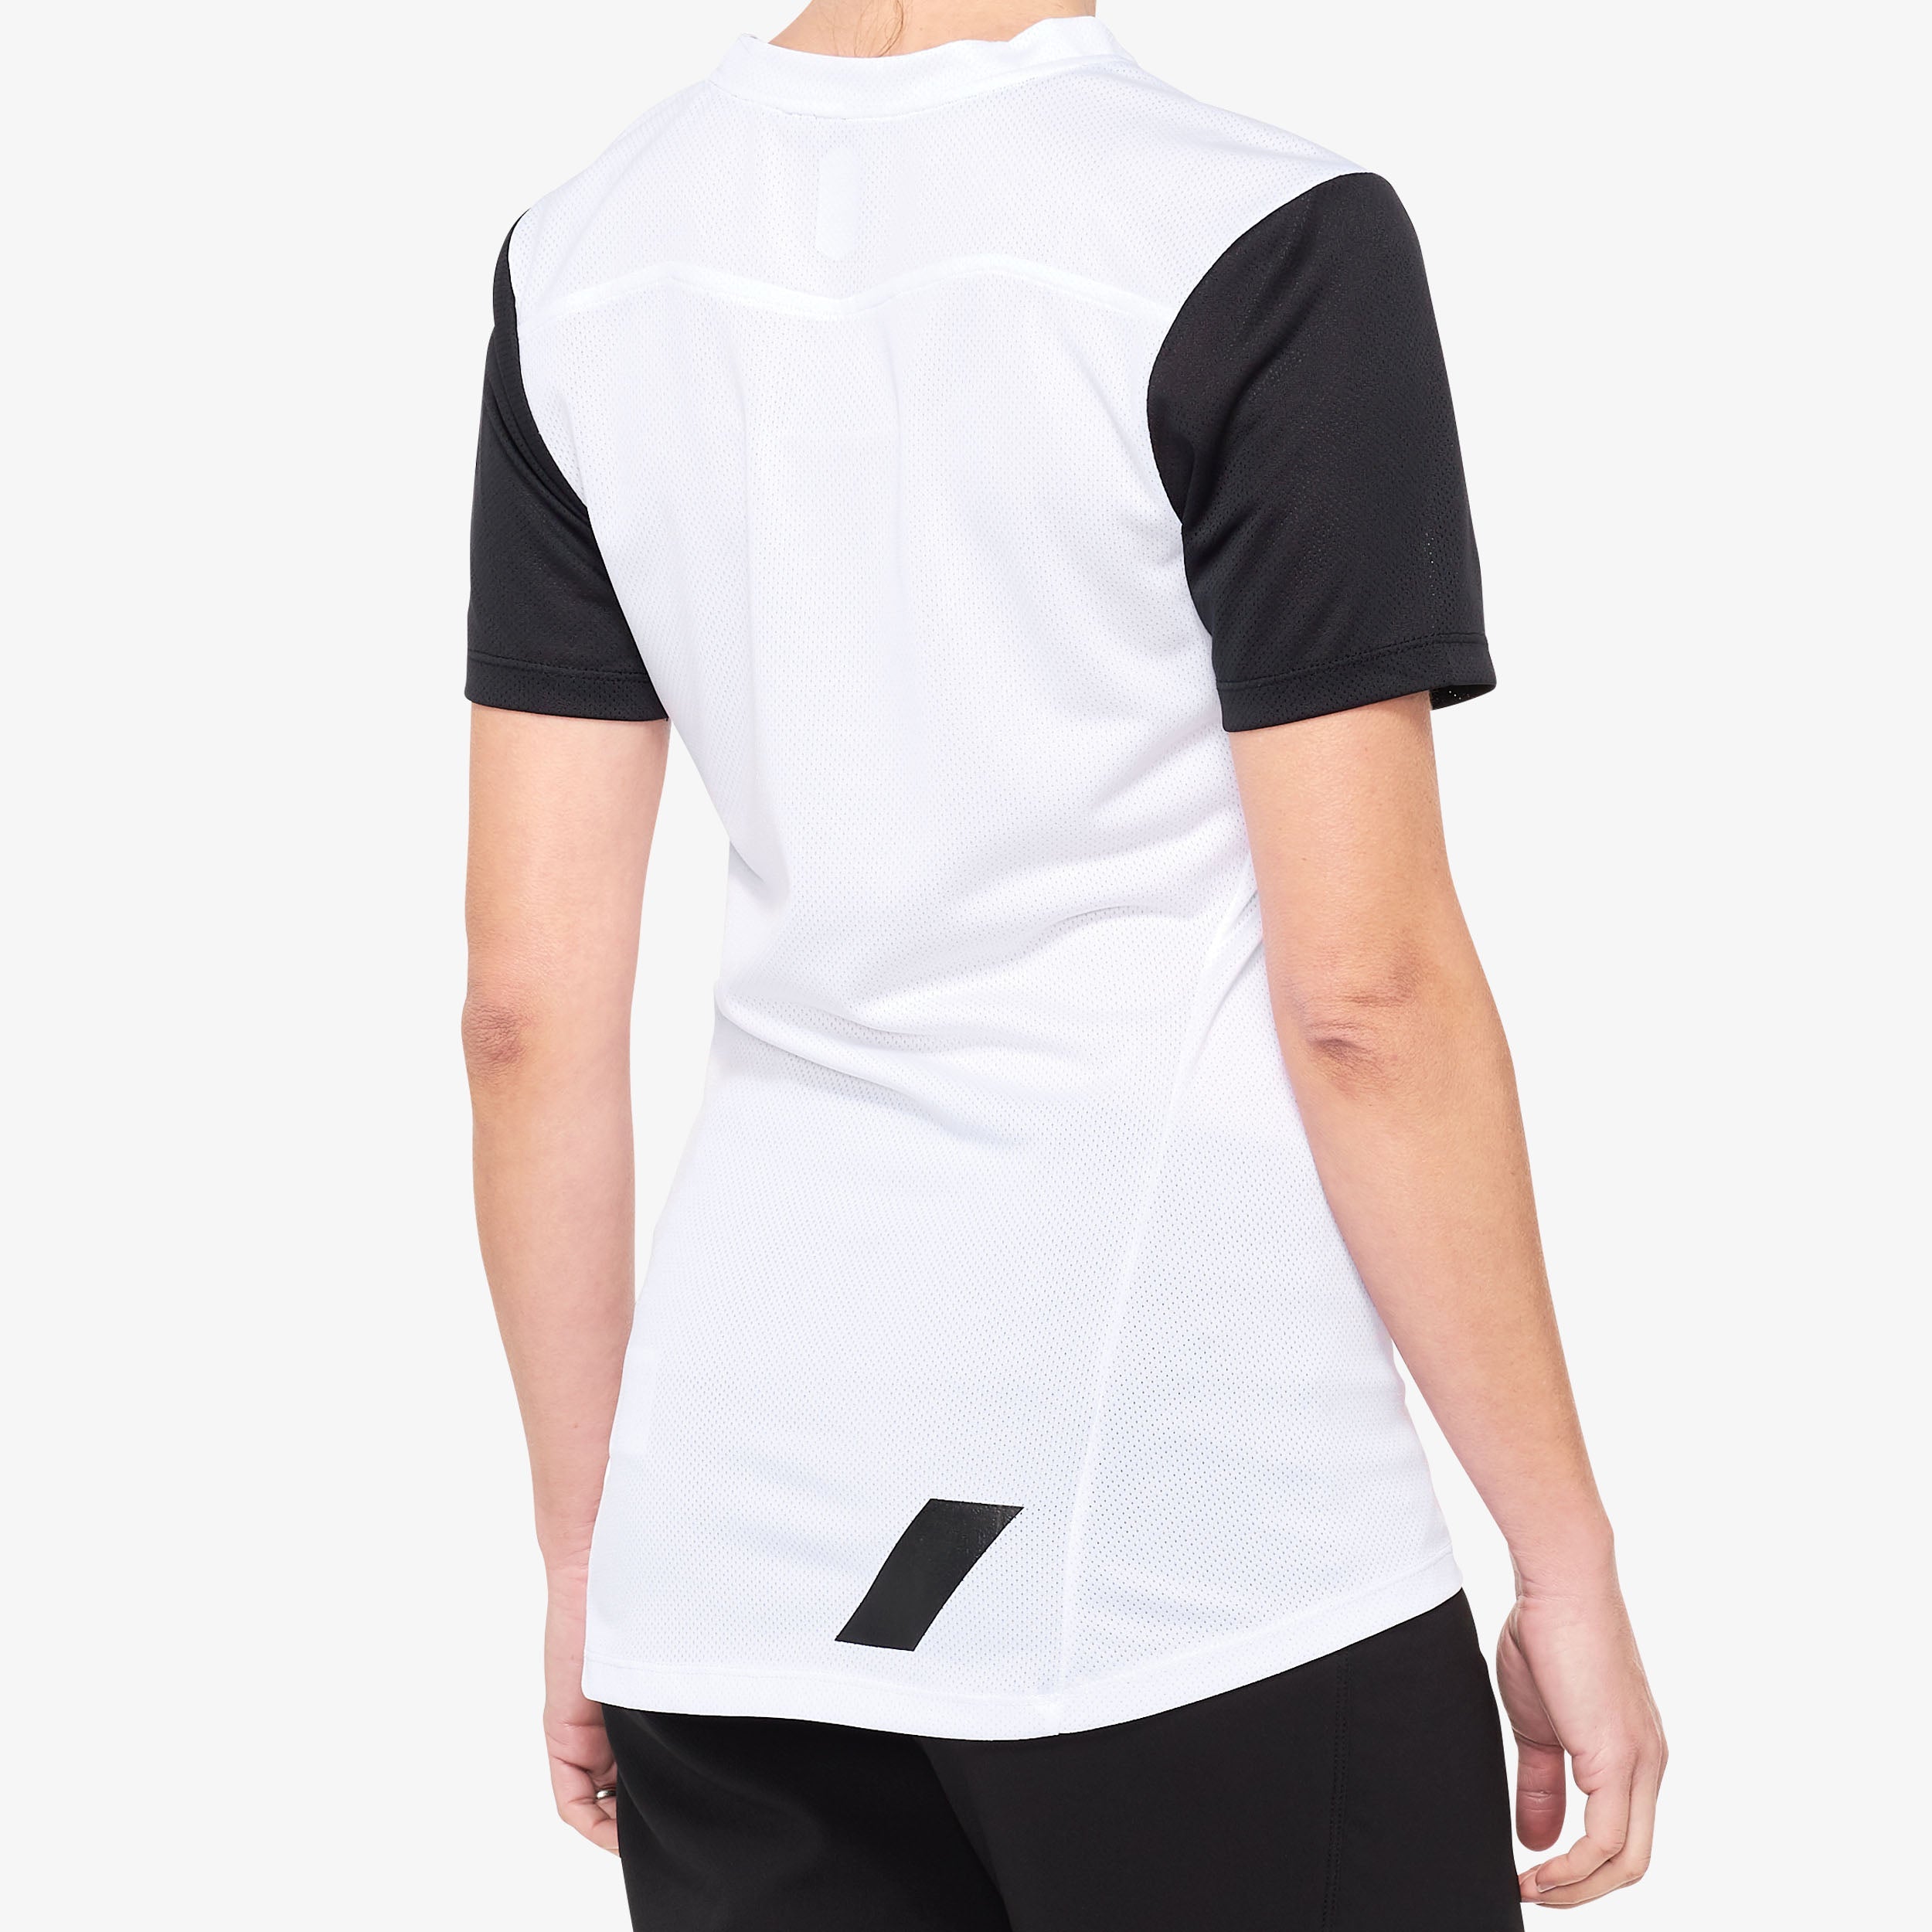 RIDECAMP Women's Short Sleeve Jersey White/Black - Secondary